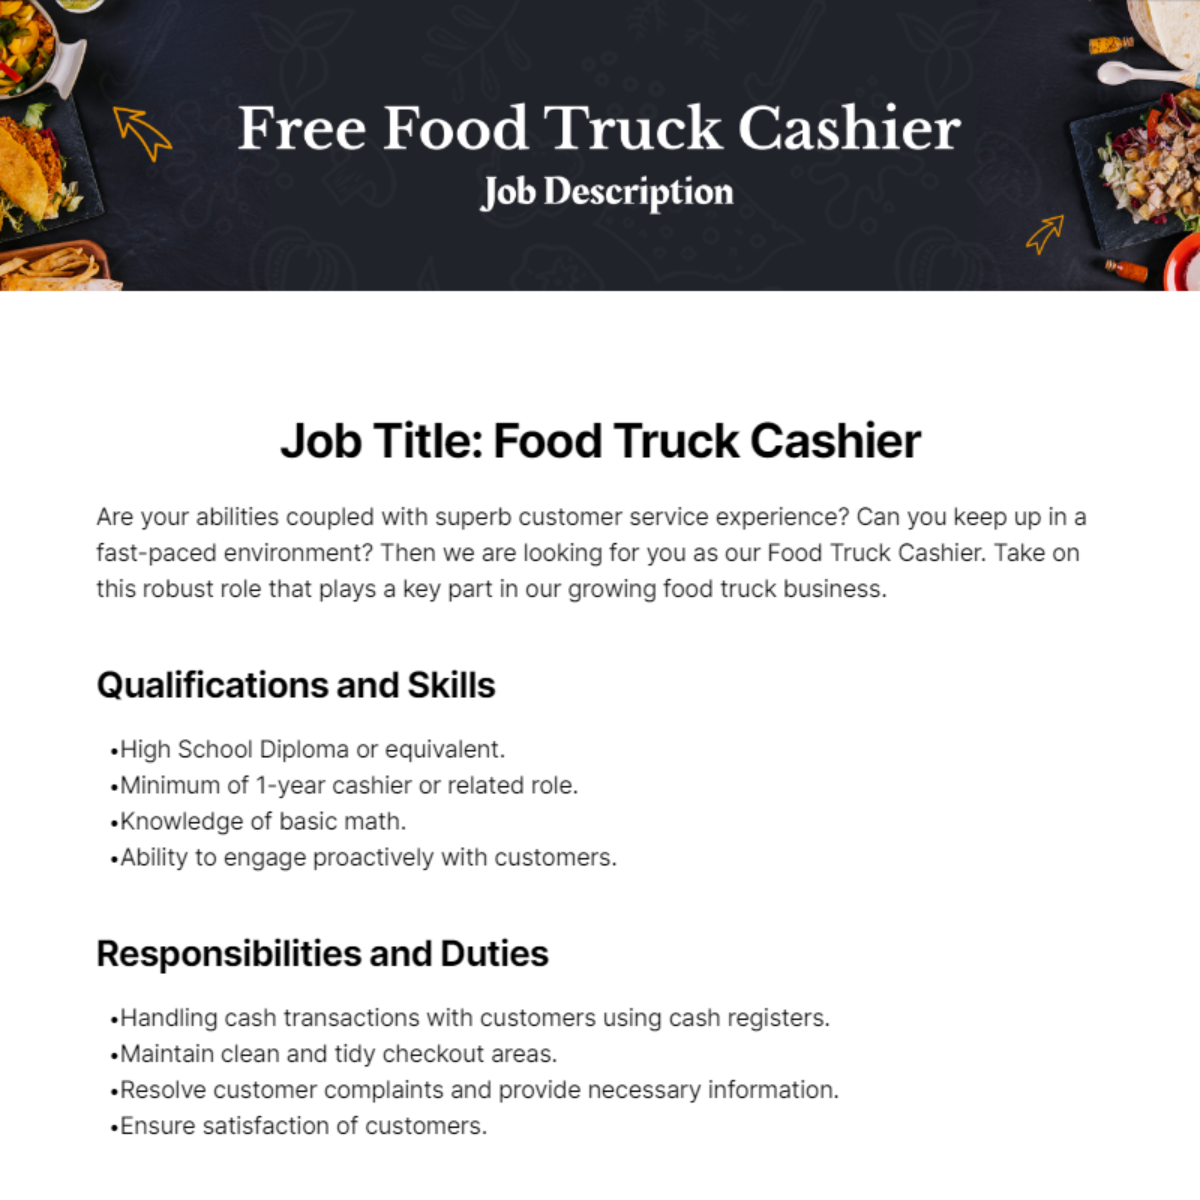 Free Food Truck Cashier Job Description Template